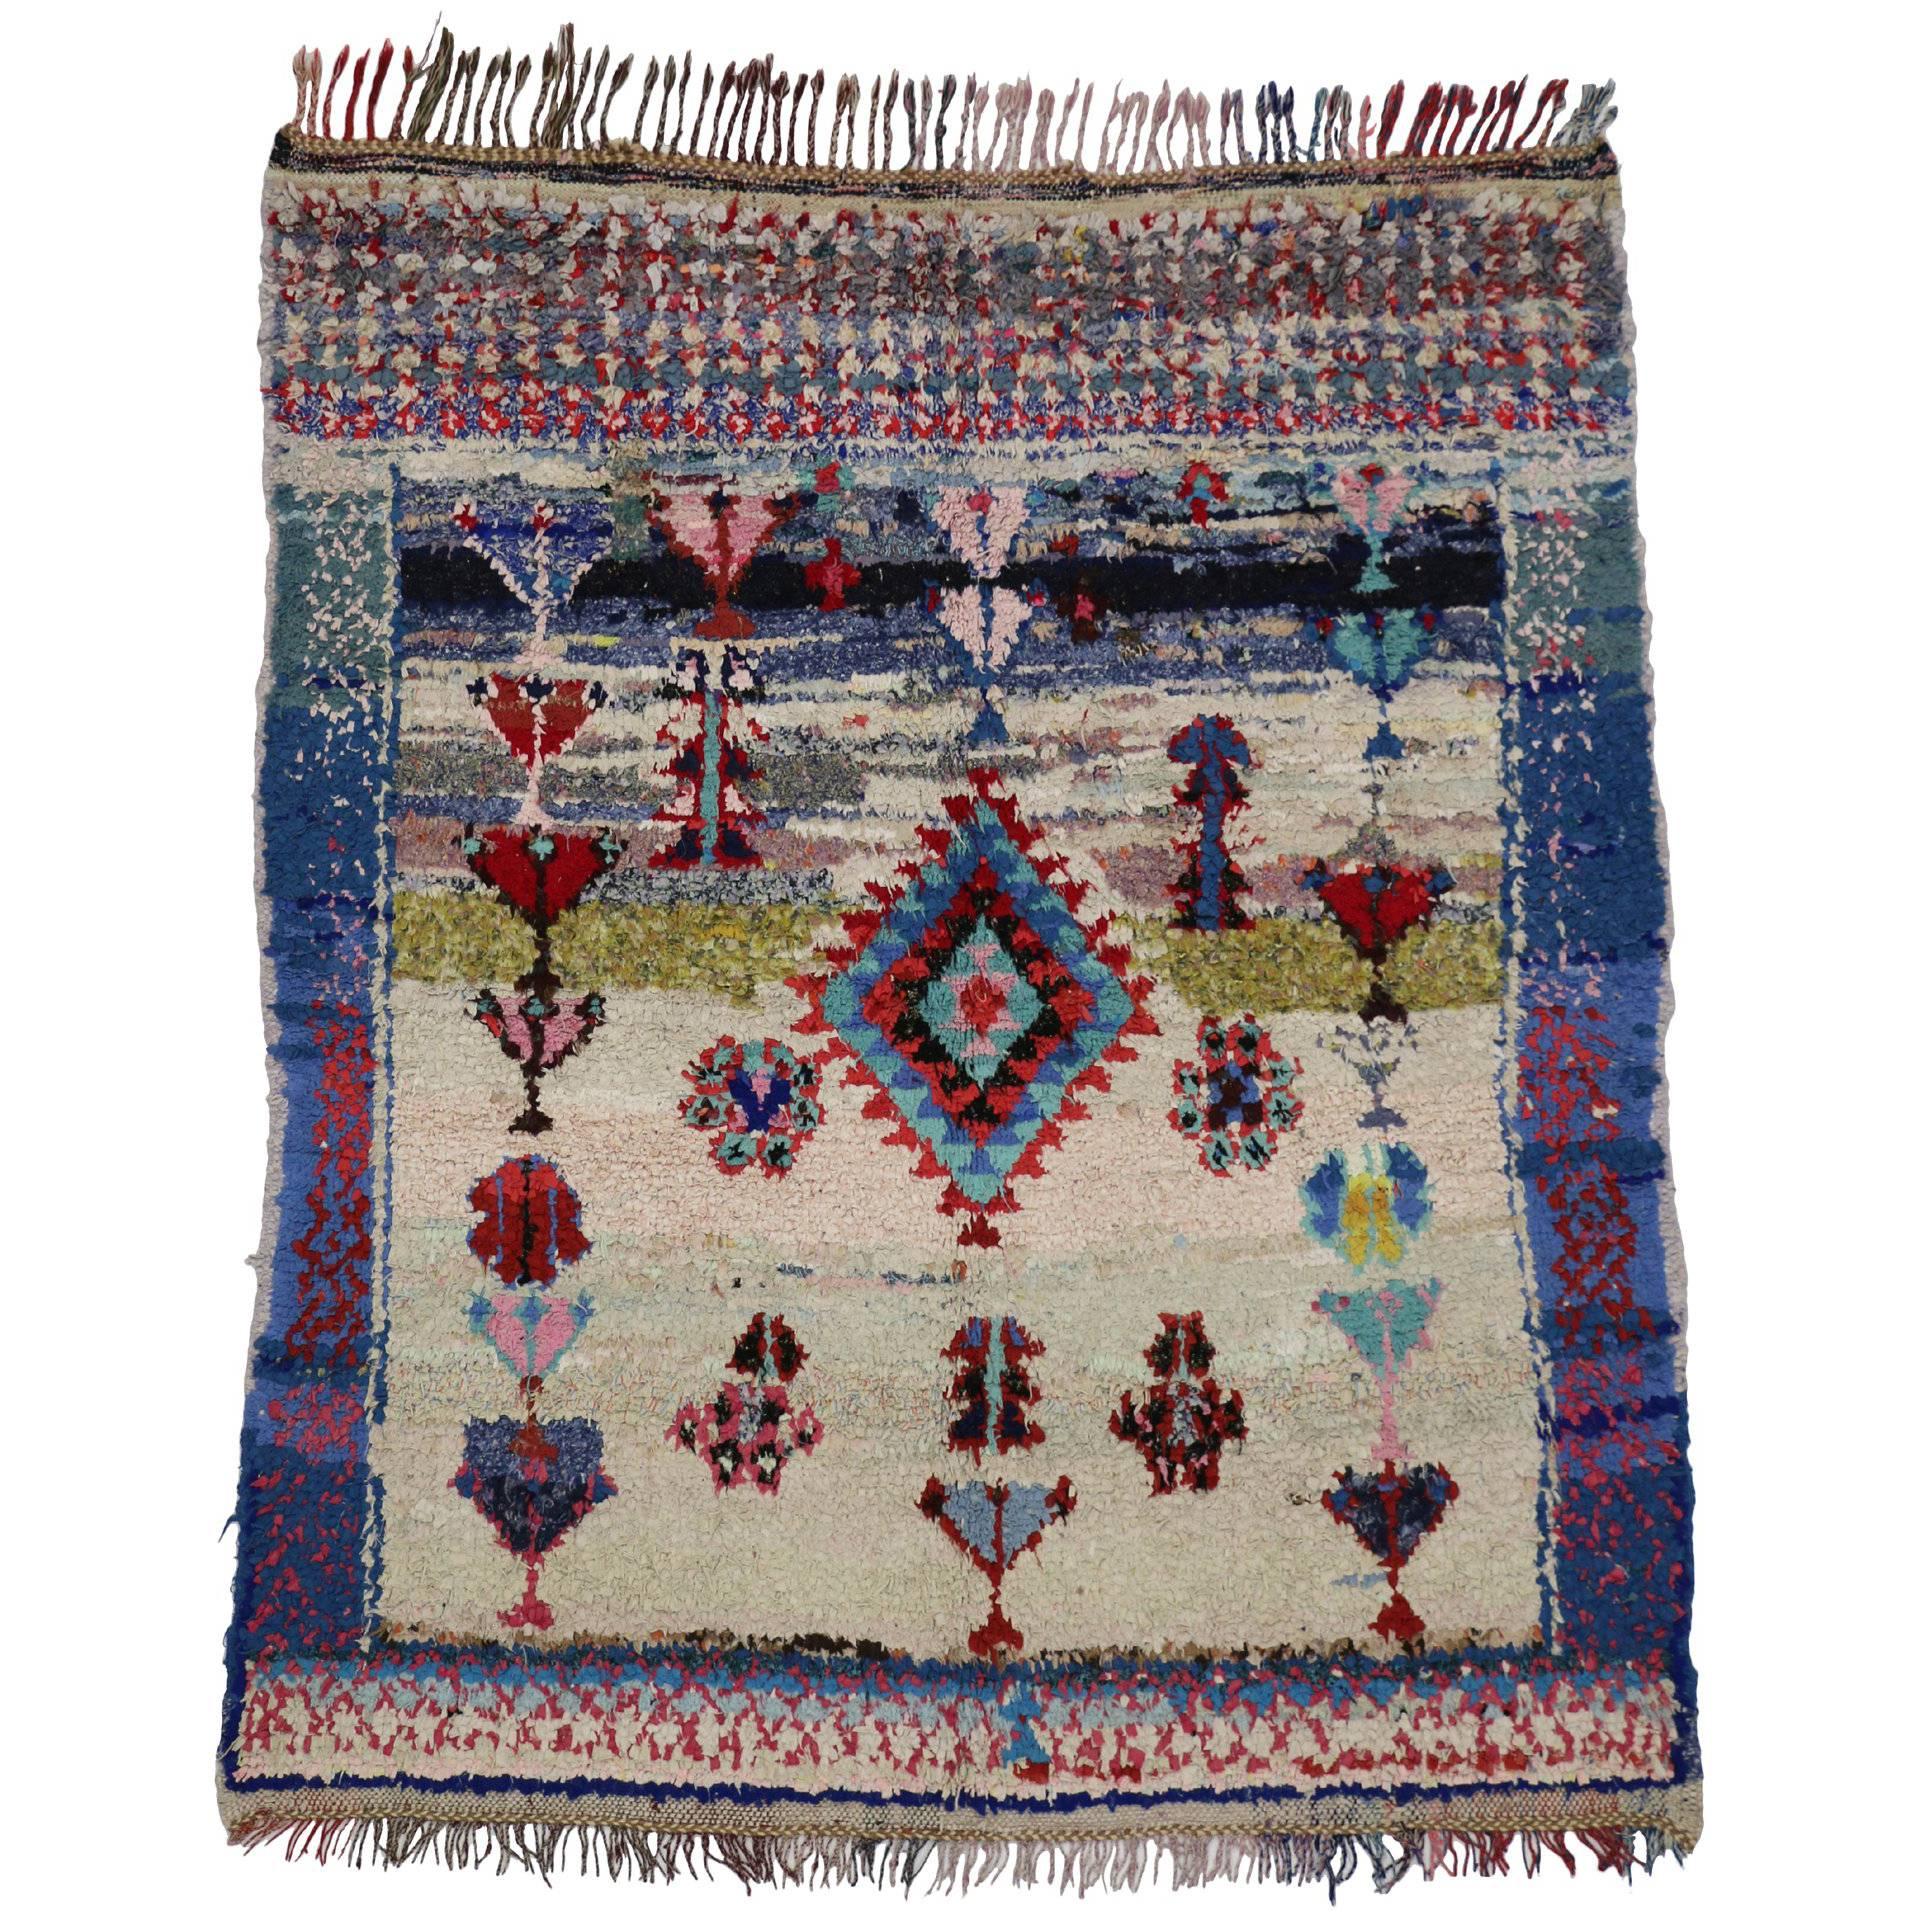 Boho Chic Vintage Berber Moroccan Boucherouite Rug, Colorful Moroccan Shag Rug